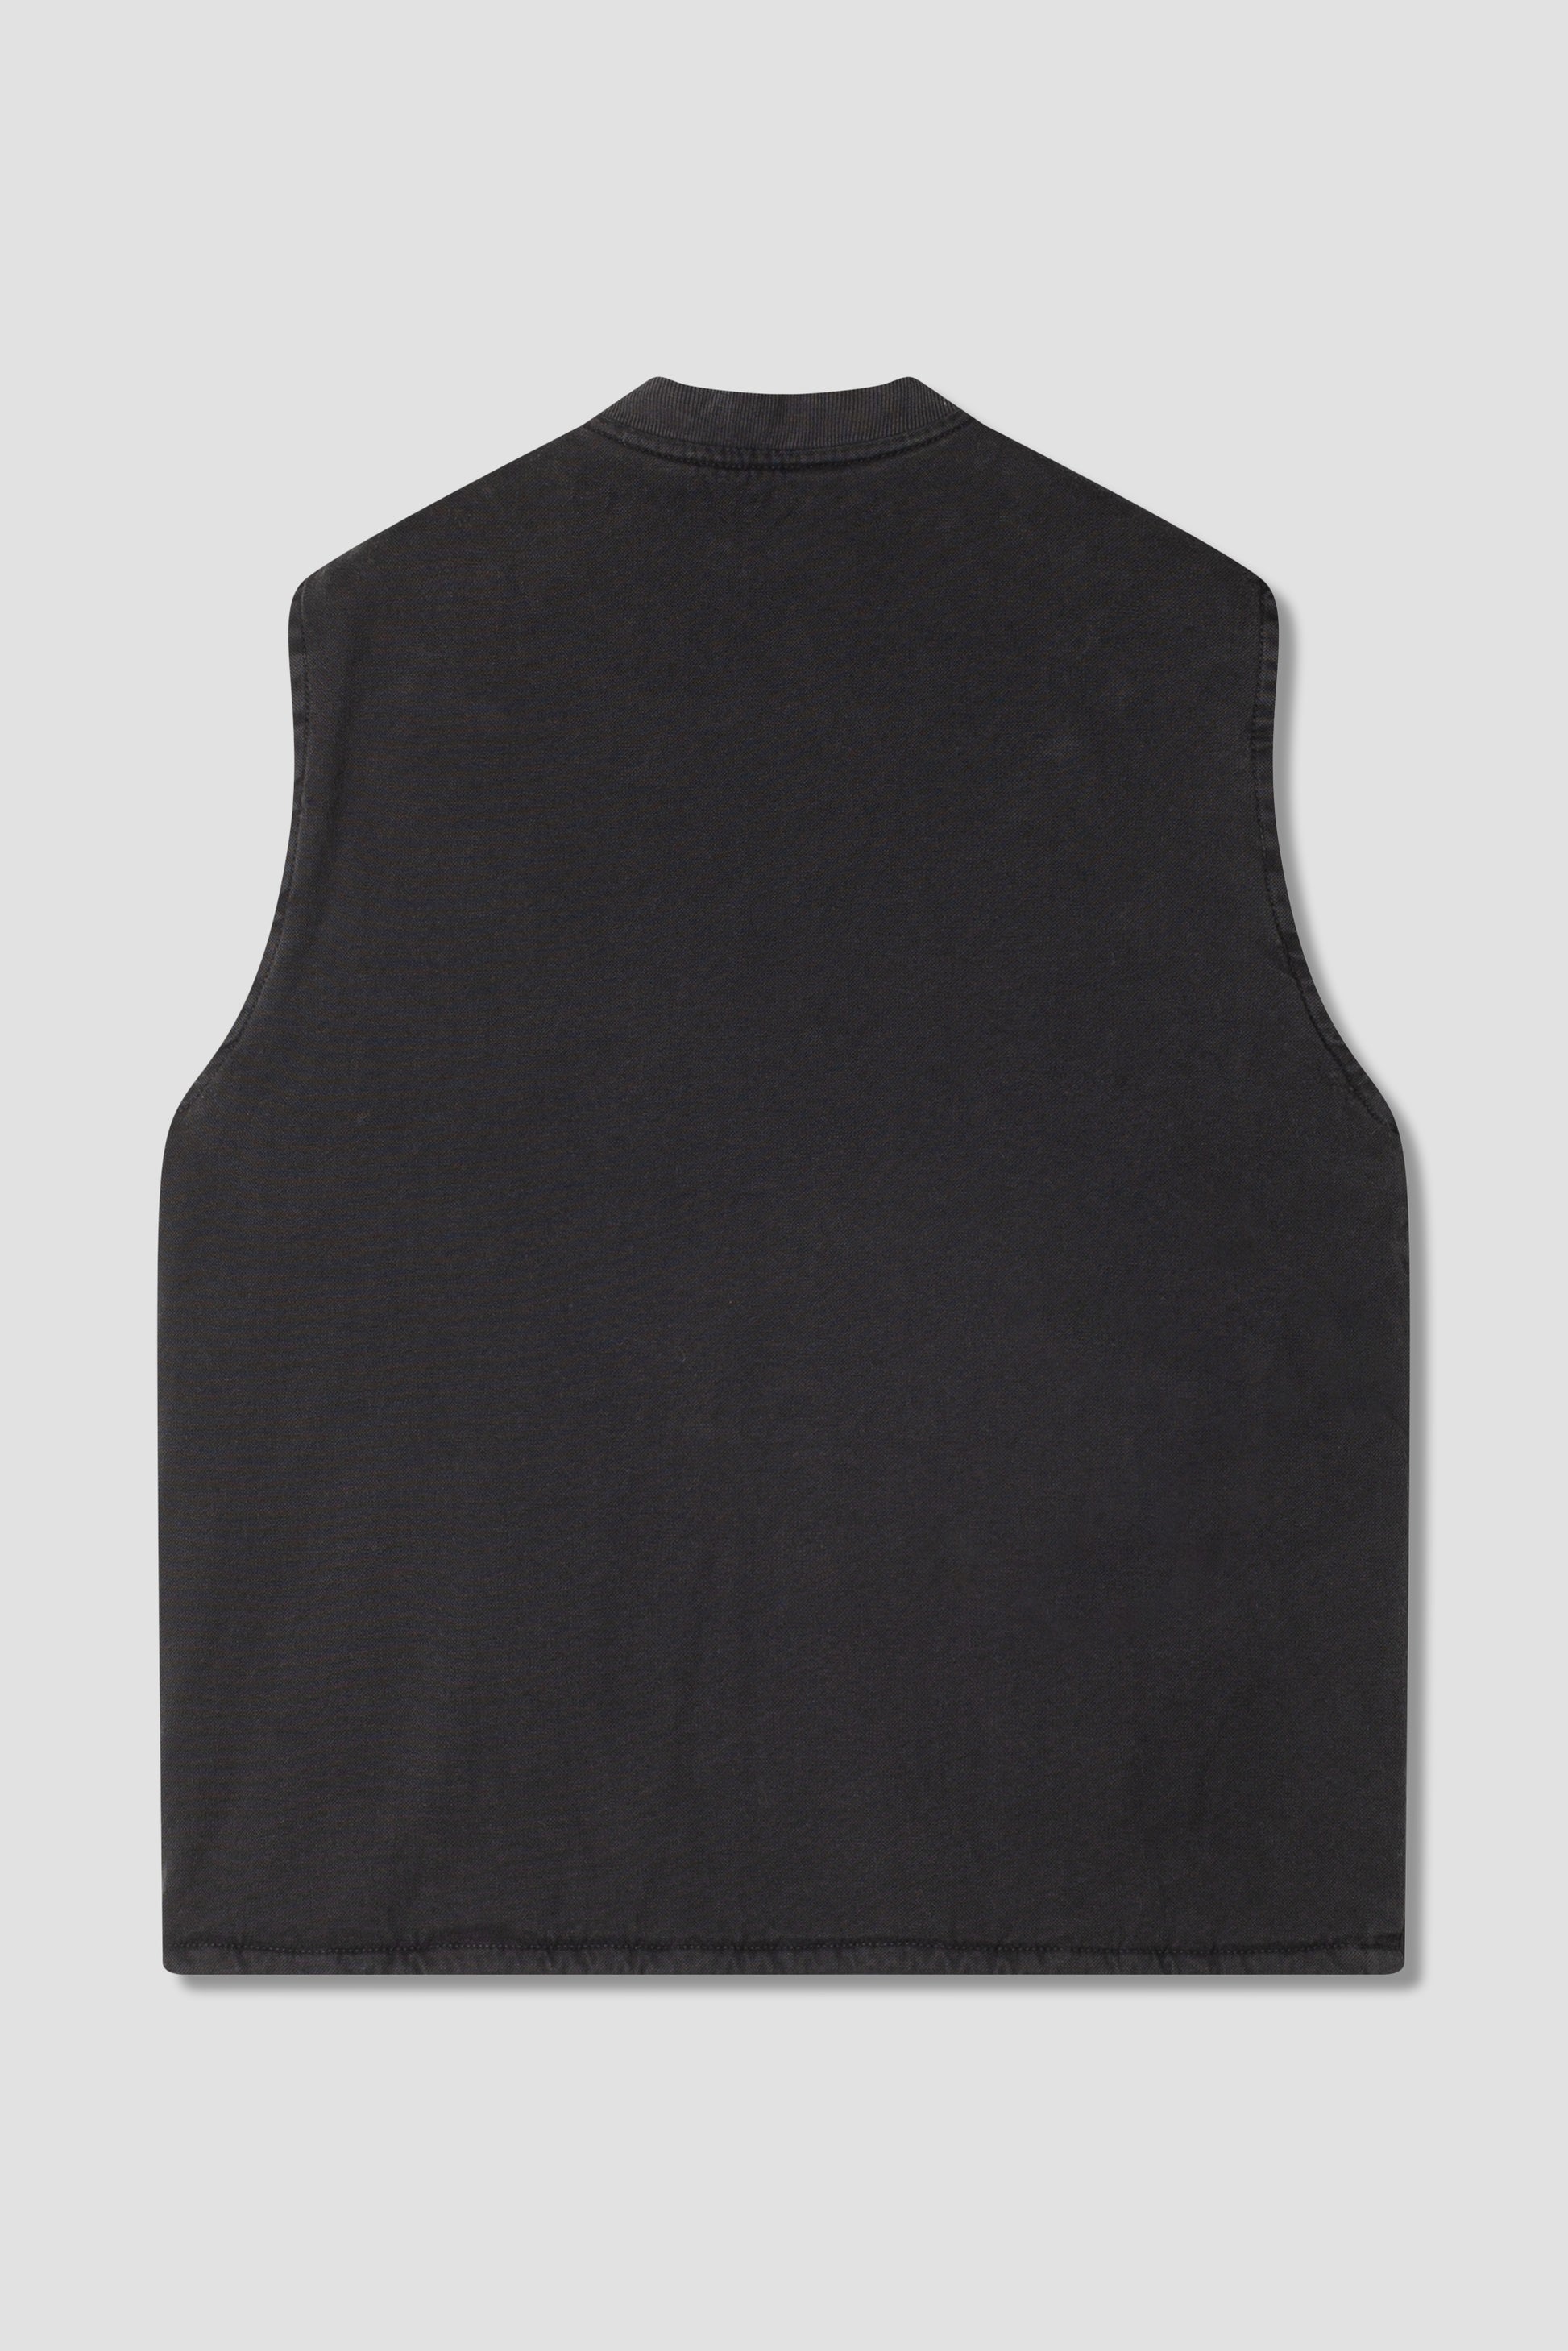 Works Vest (Black Duck) – Stan Ray